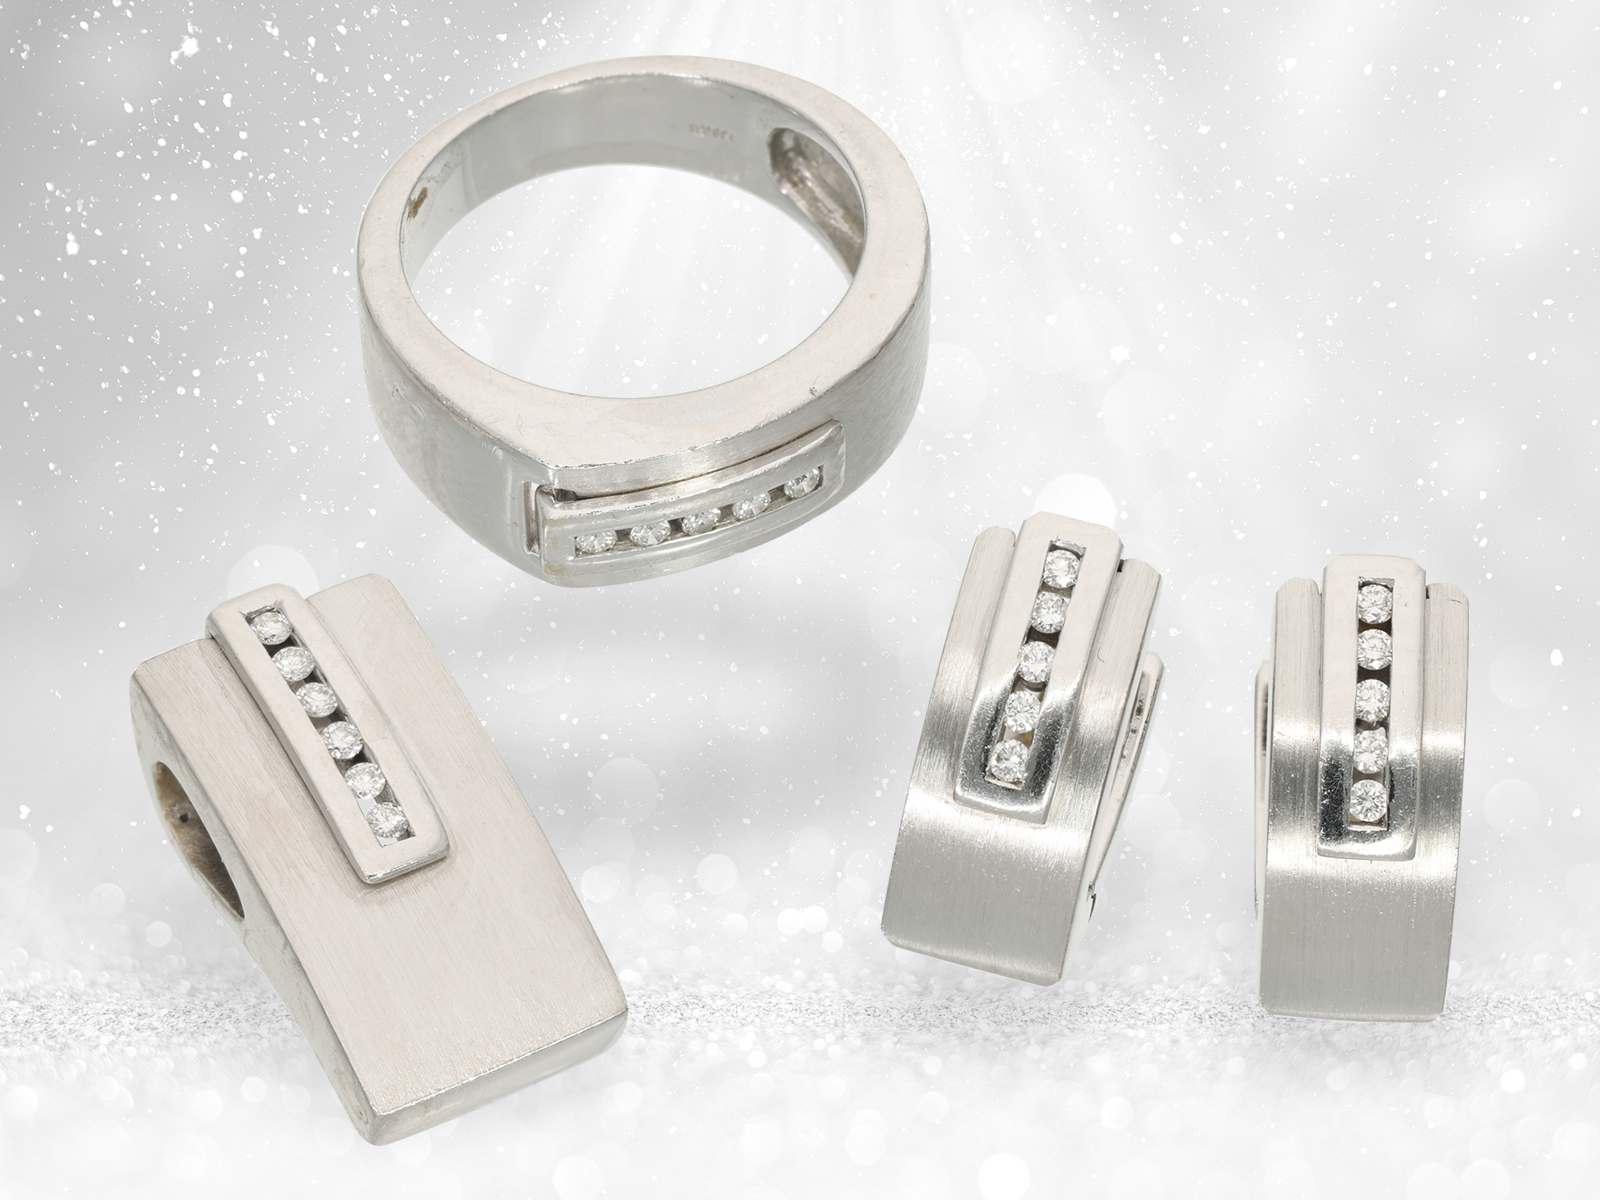 Earrings/ring/pendant: modern white gold designer jewellery set with brilliant-cut diamonds